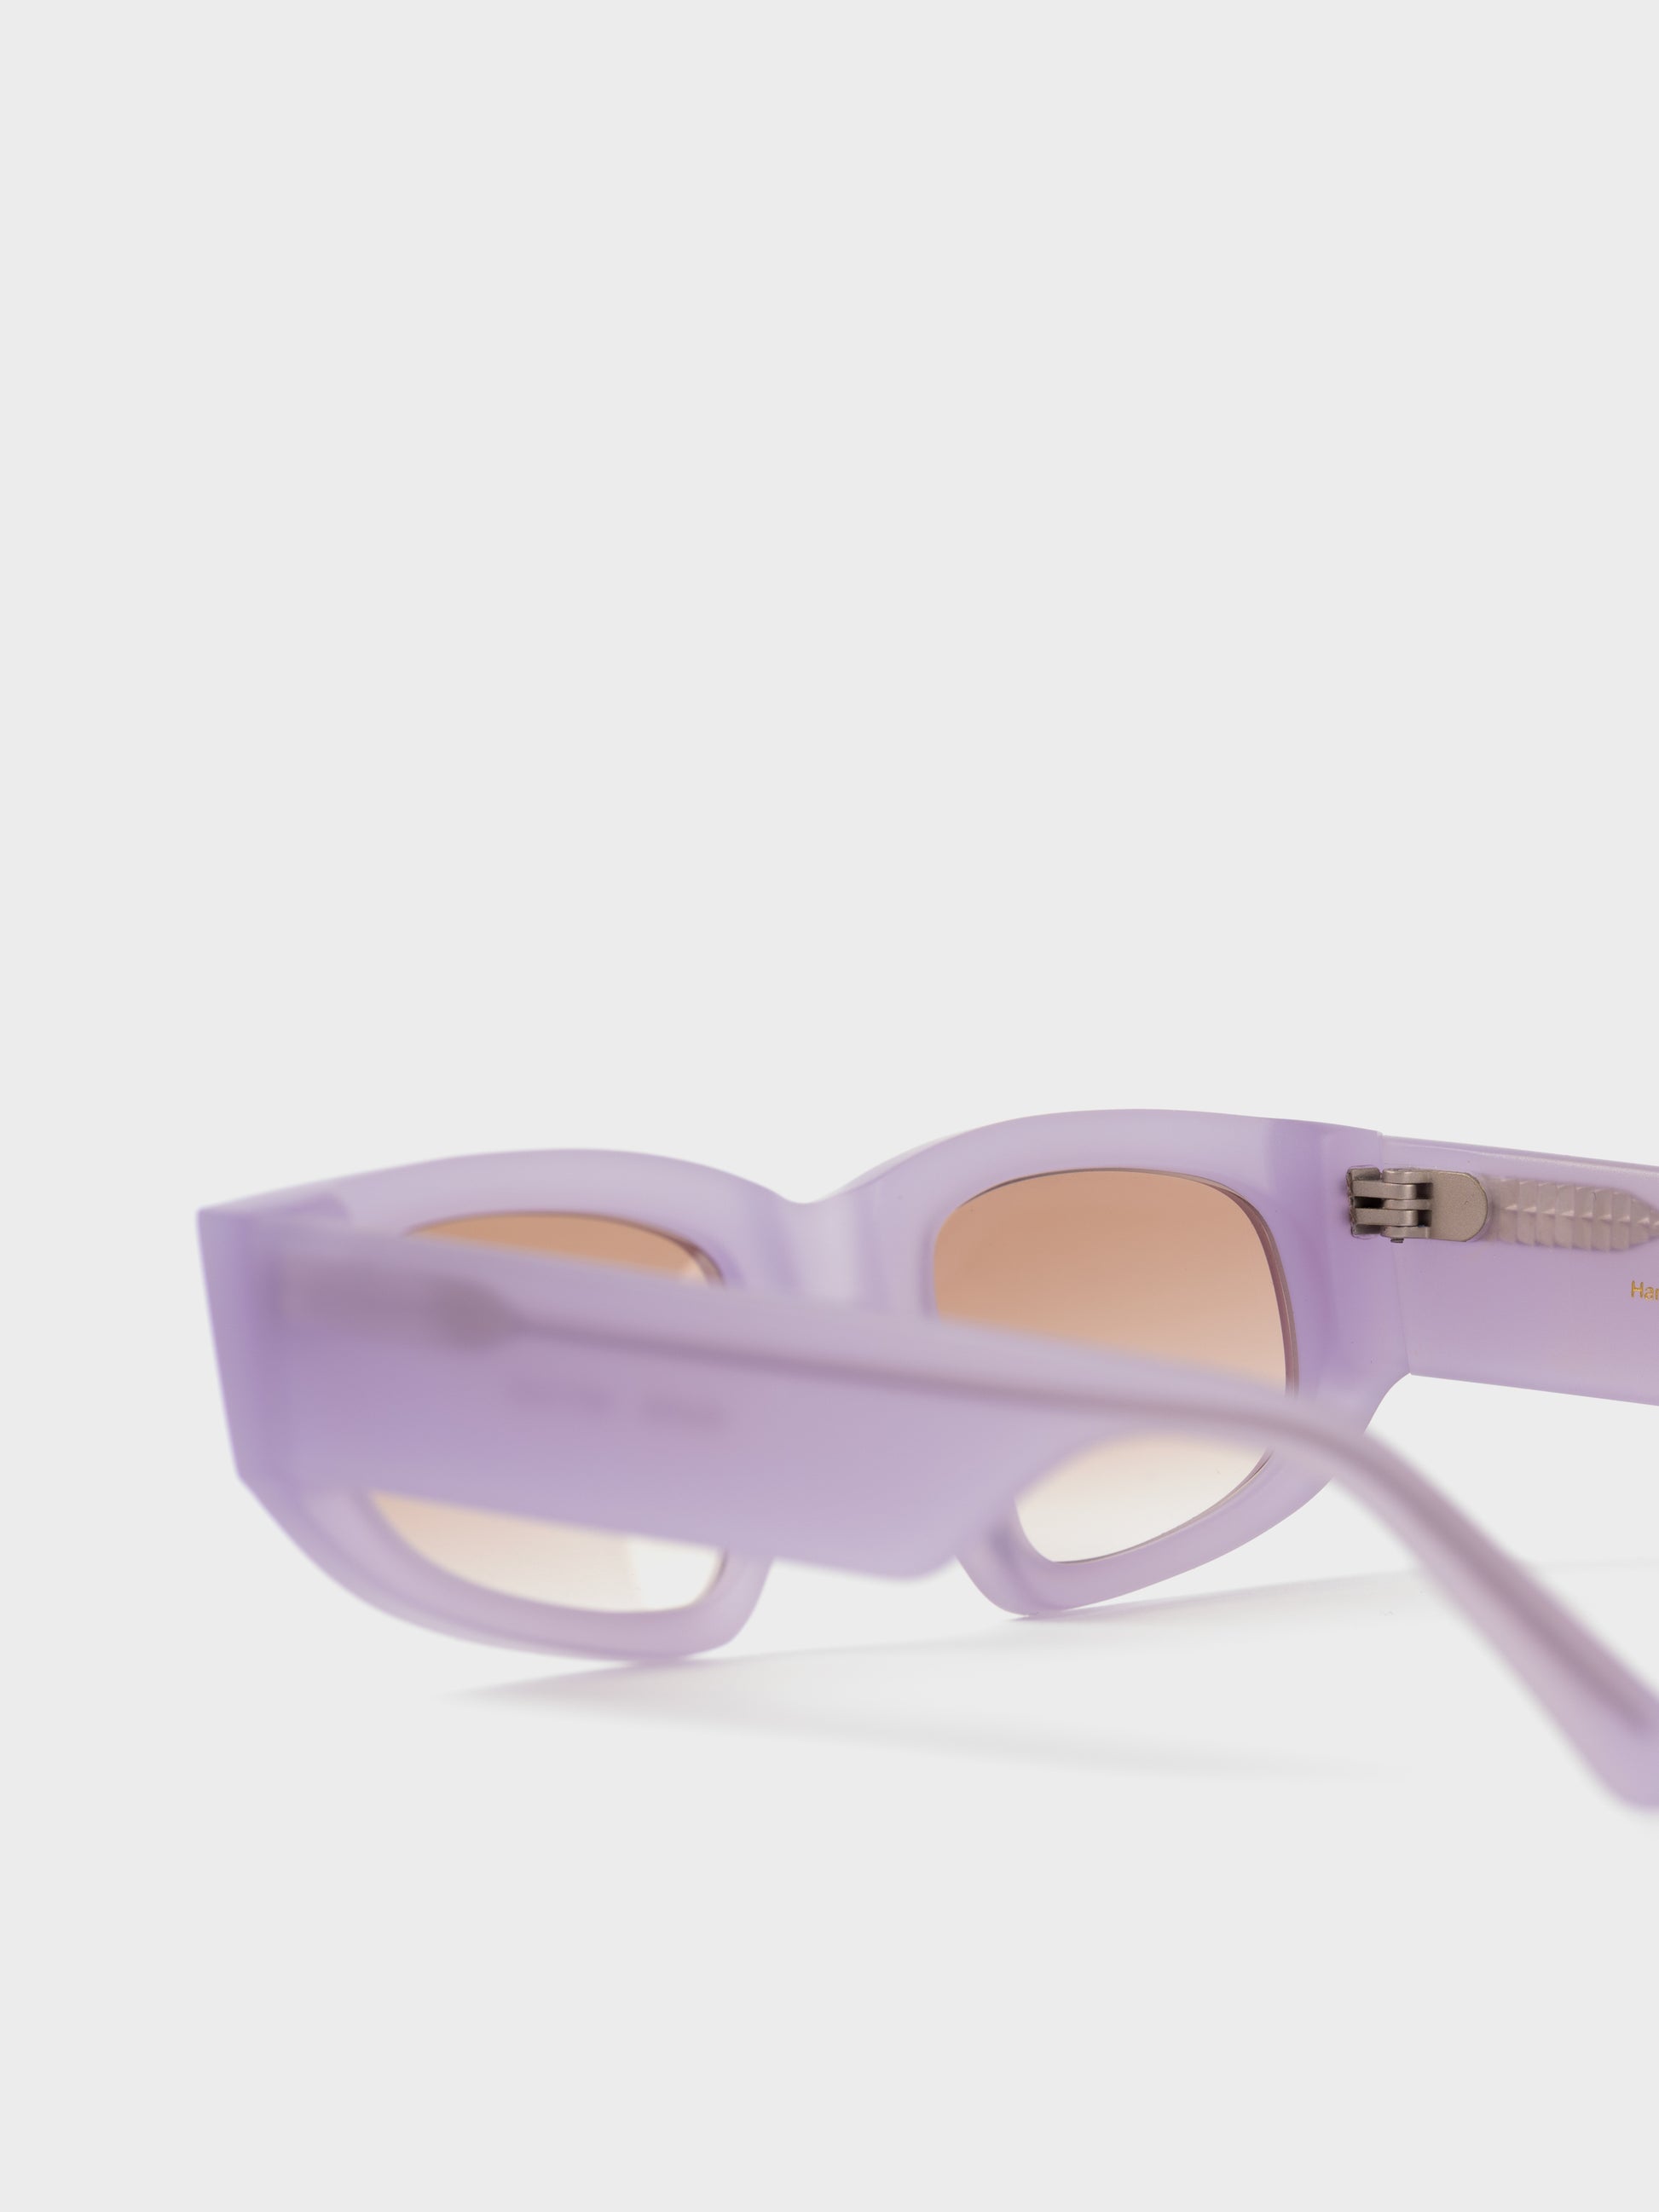 Monokel Sunglasses - Eclipse/Matt Lilac